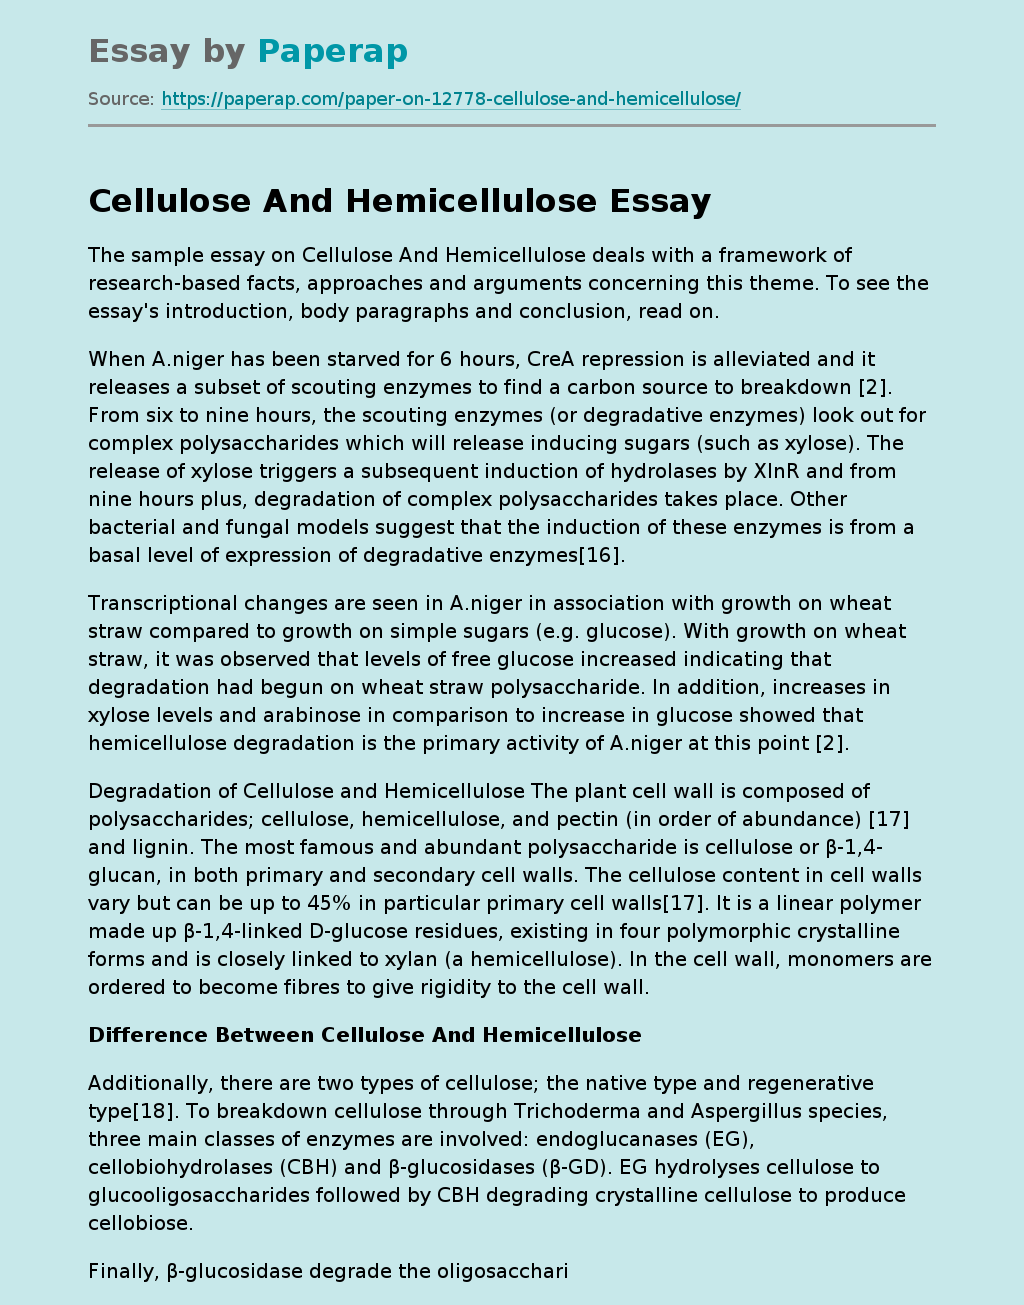 Cellulose And Hemicellulose